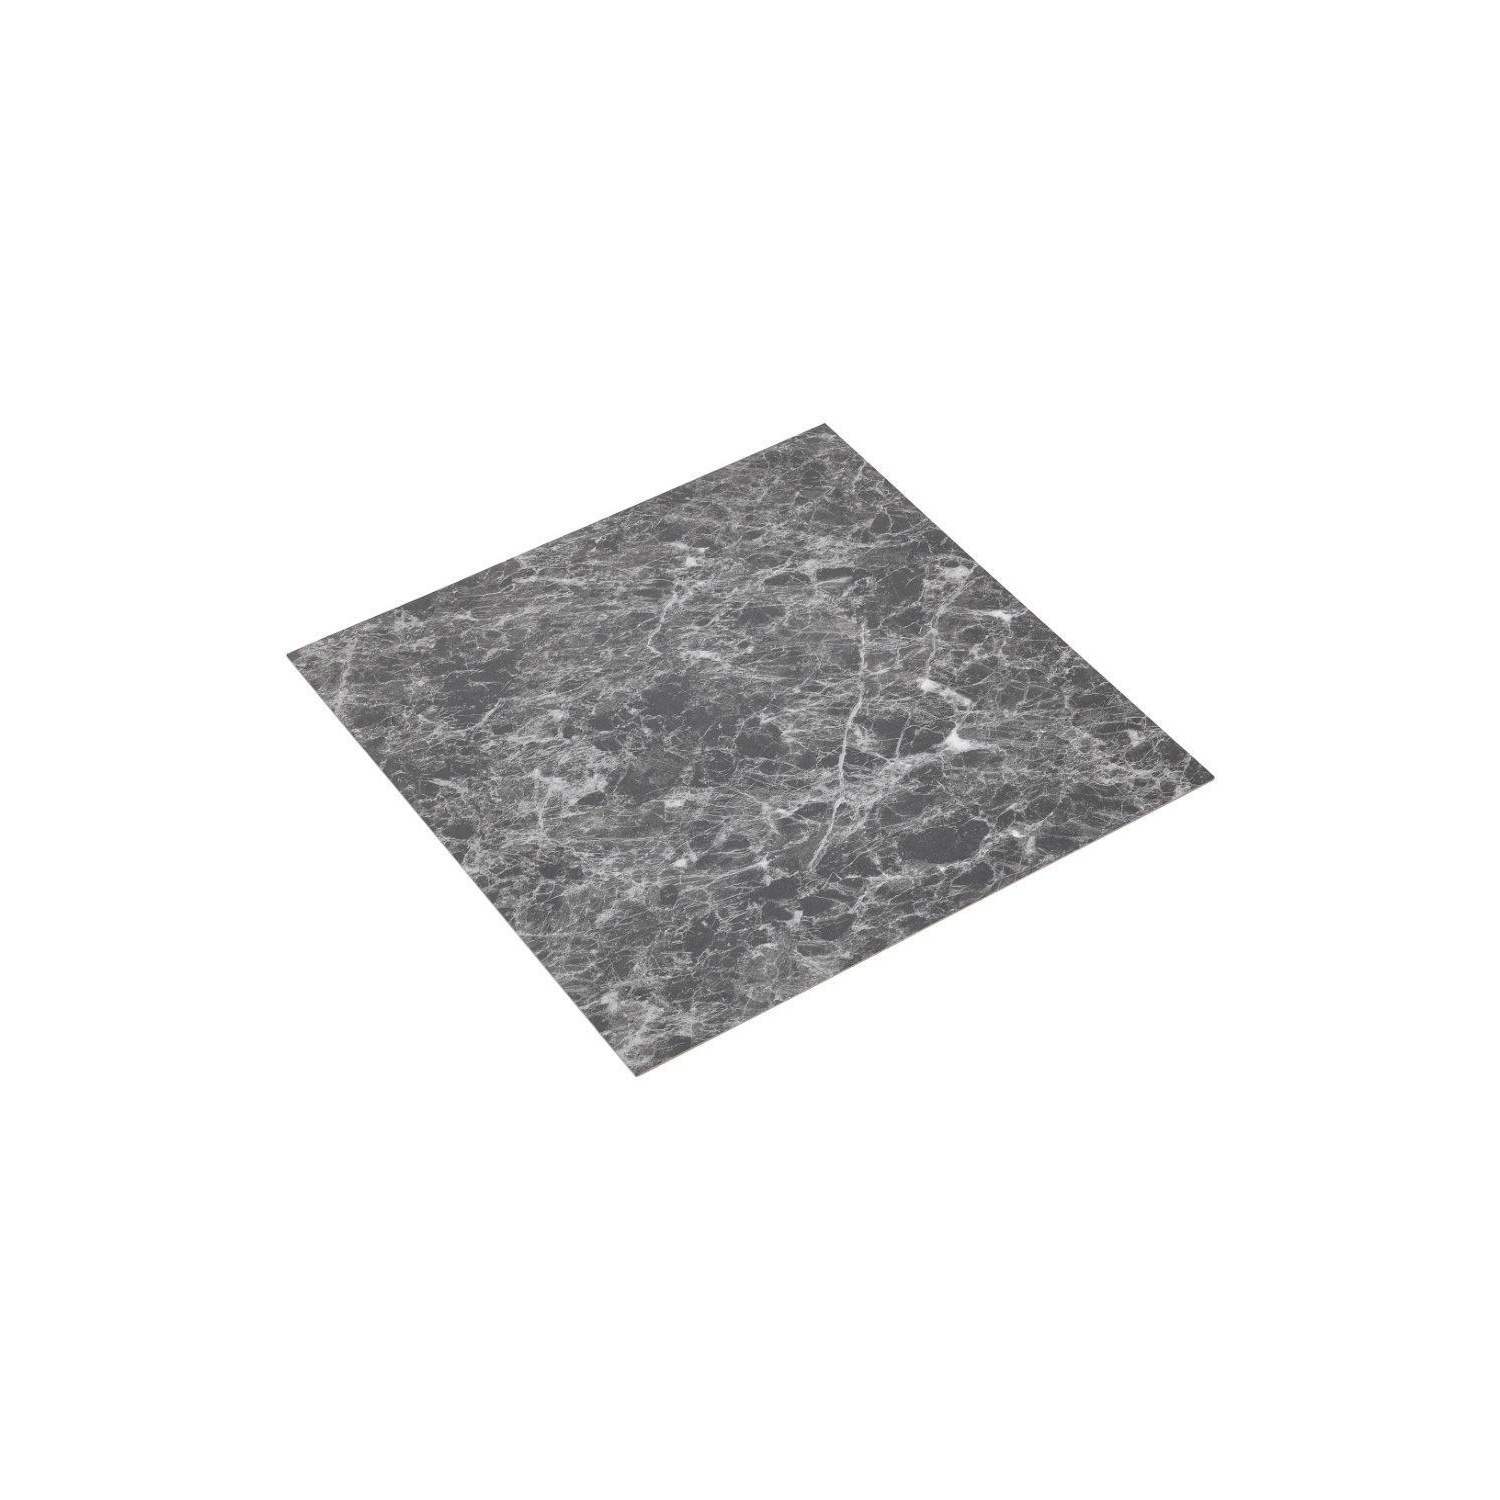 24Pcs Square Self Adhesive Stone Effect Floor Tiles - image 1